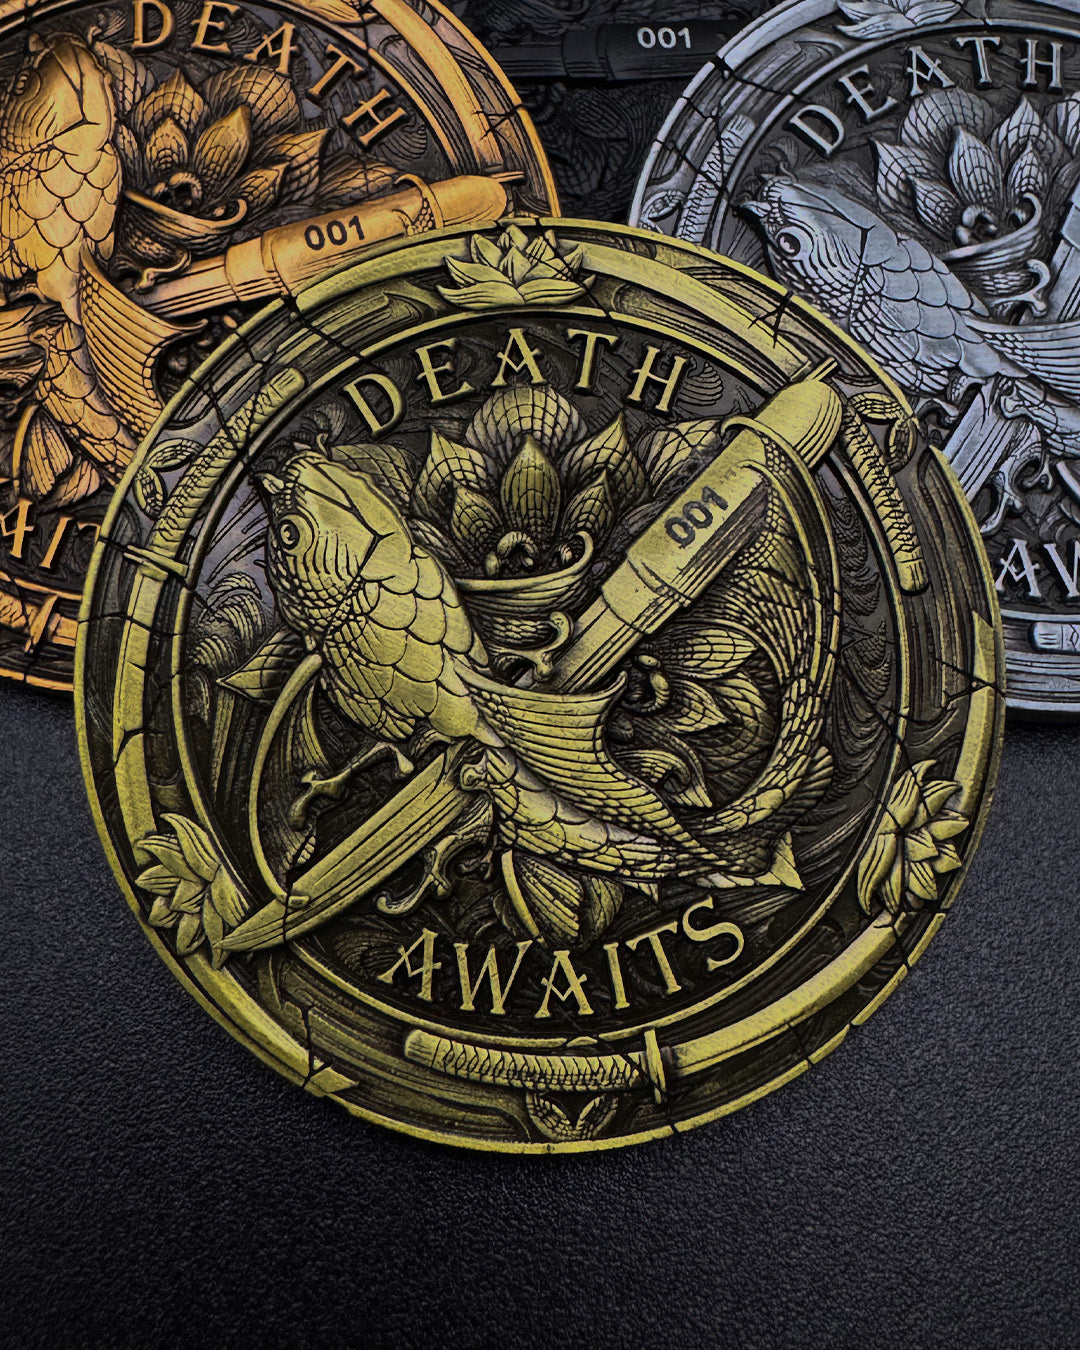 Death awaits VIII - Collectors Edition - Limitiert 20 - Coin